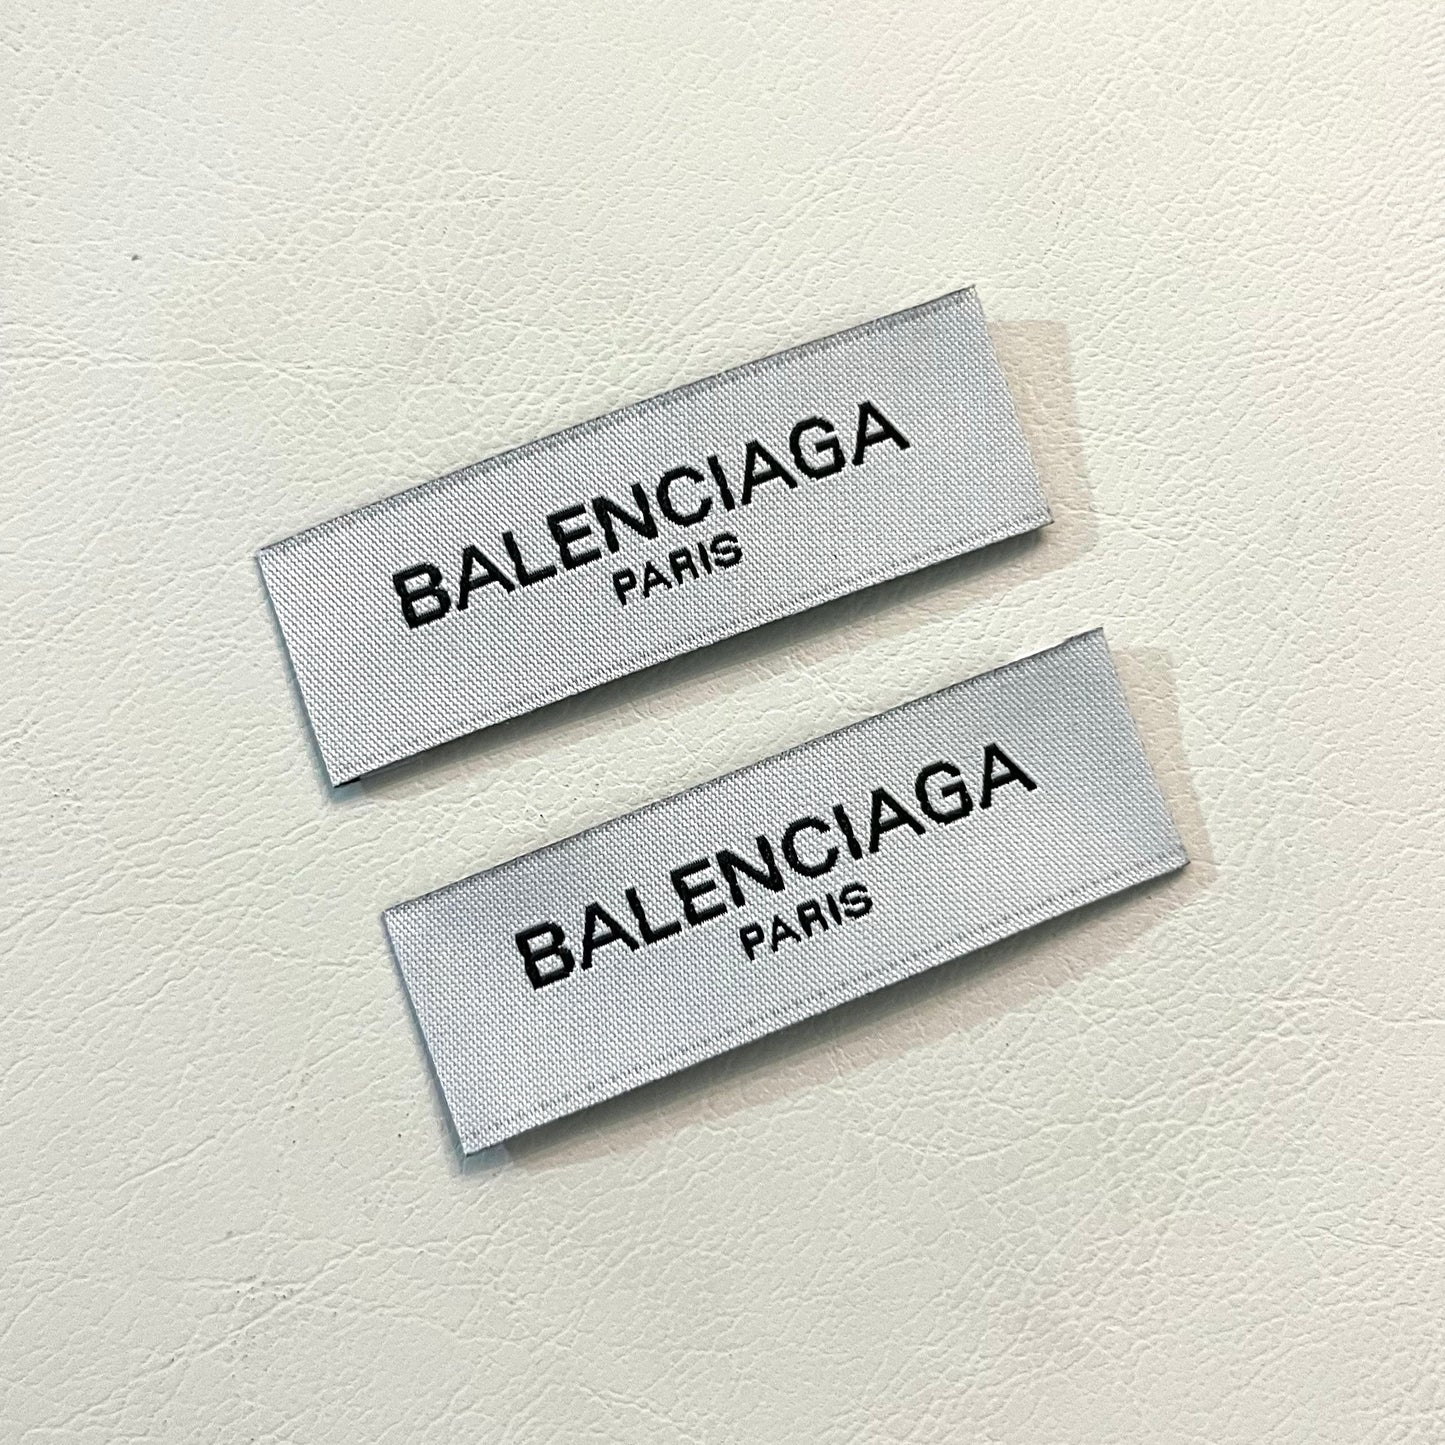 Balenciaga Paris Tag Label for Custom Apparel DIY Sewing Accessories